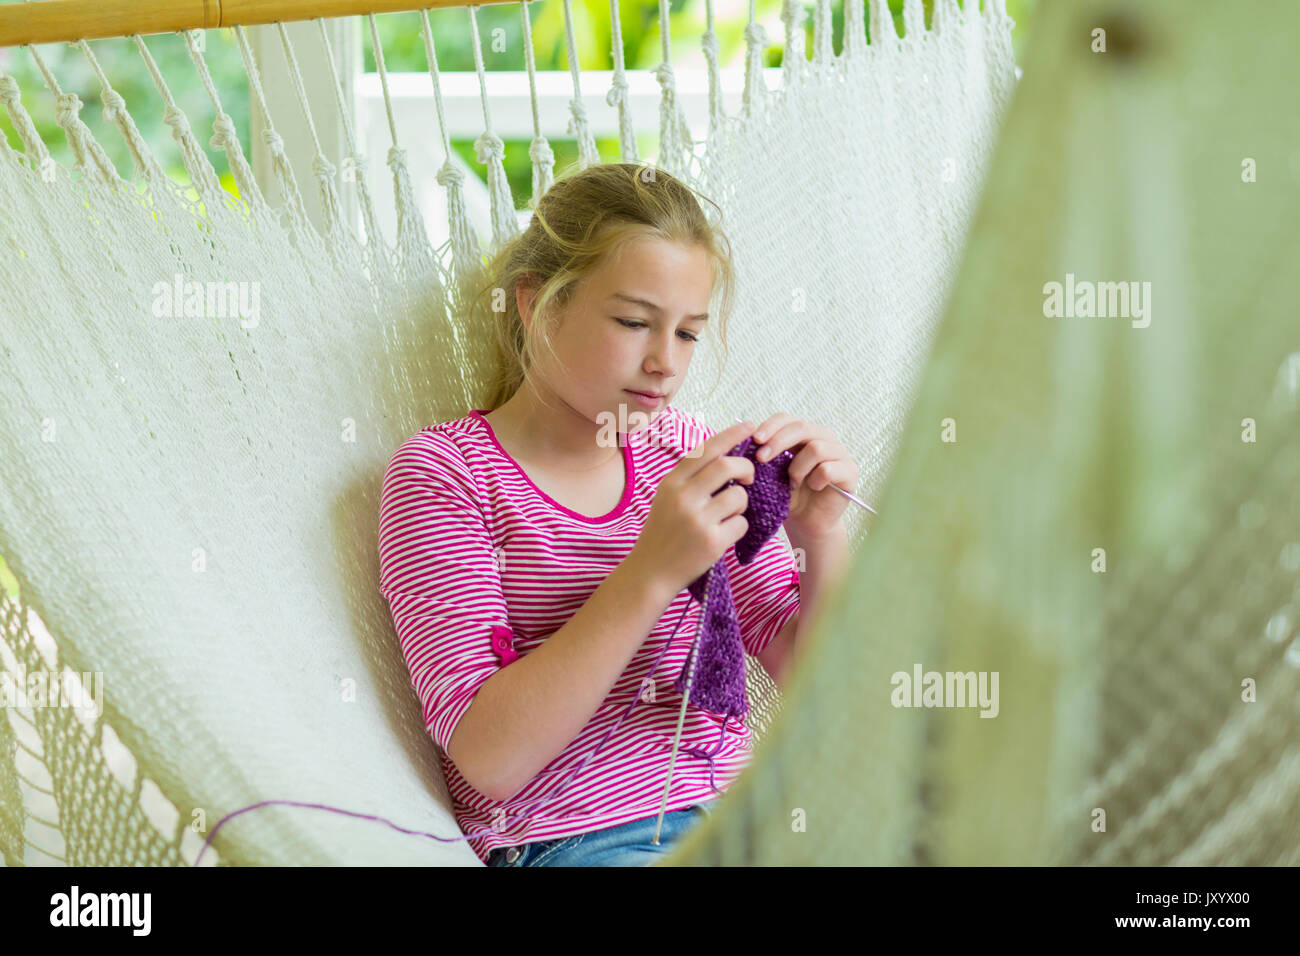 Caucasian girl laying in hammock and knitting Stock Photo